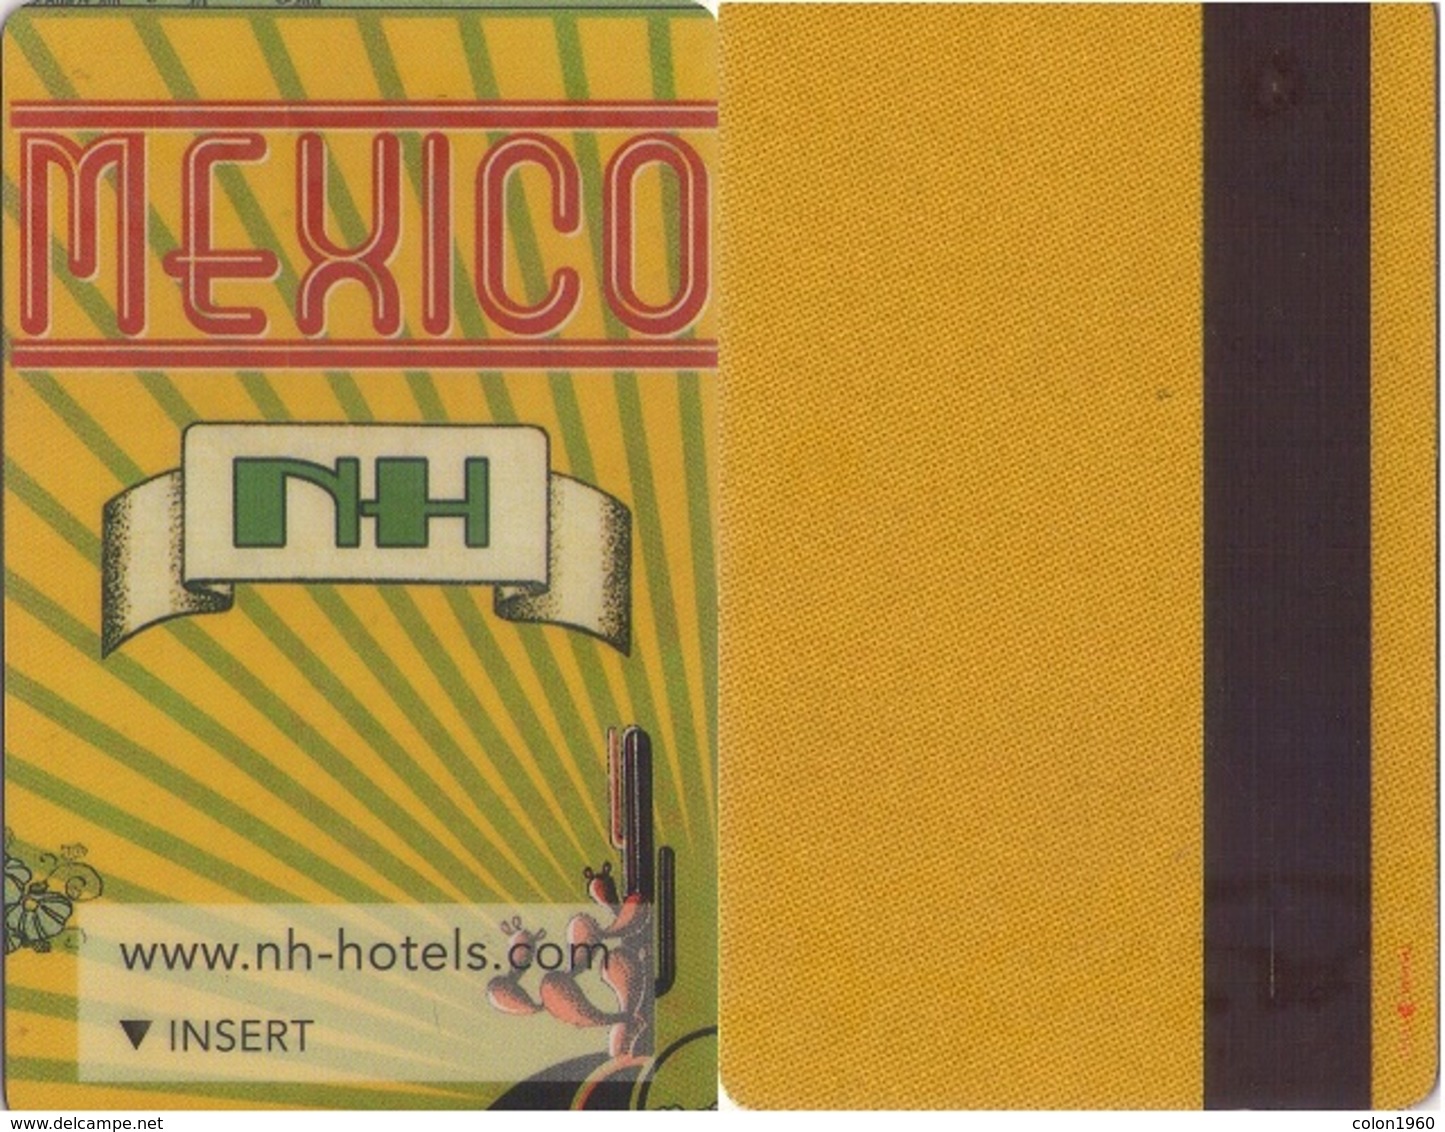 SPAIN. HOTEL KEY CARD. NH MEXICO. 005. - Cartas De Hotels